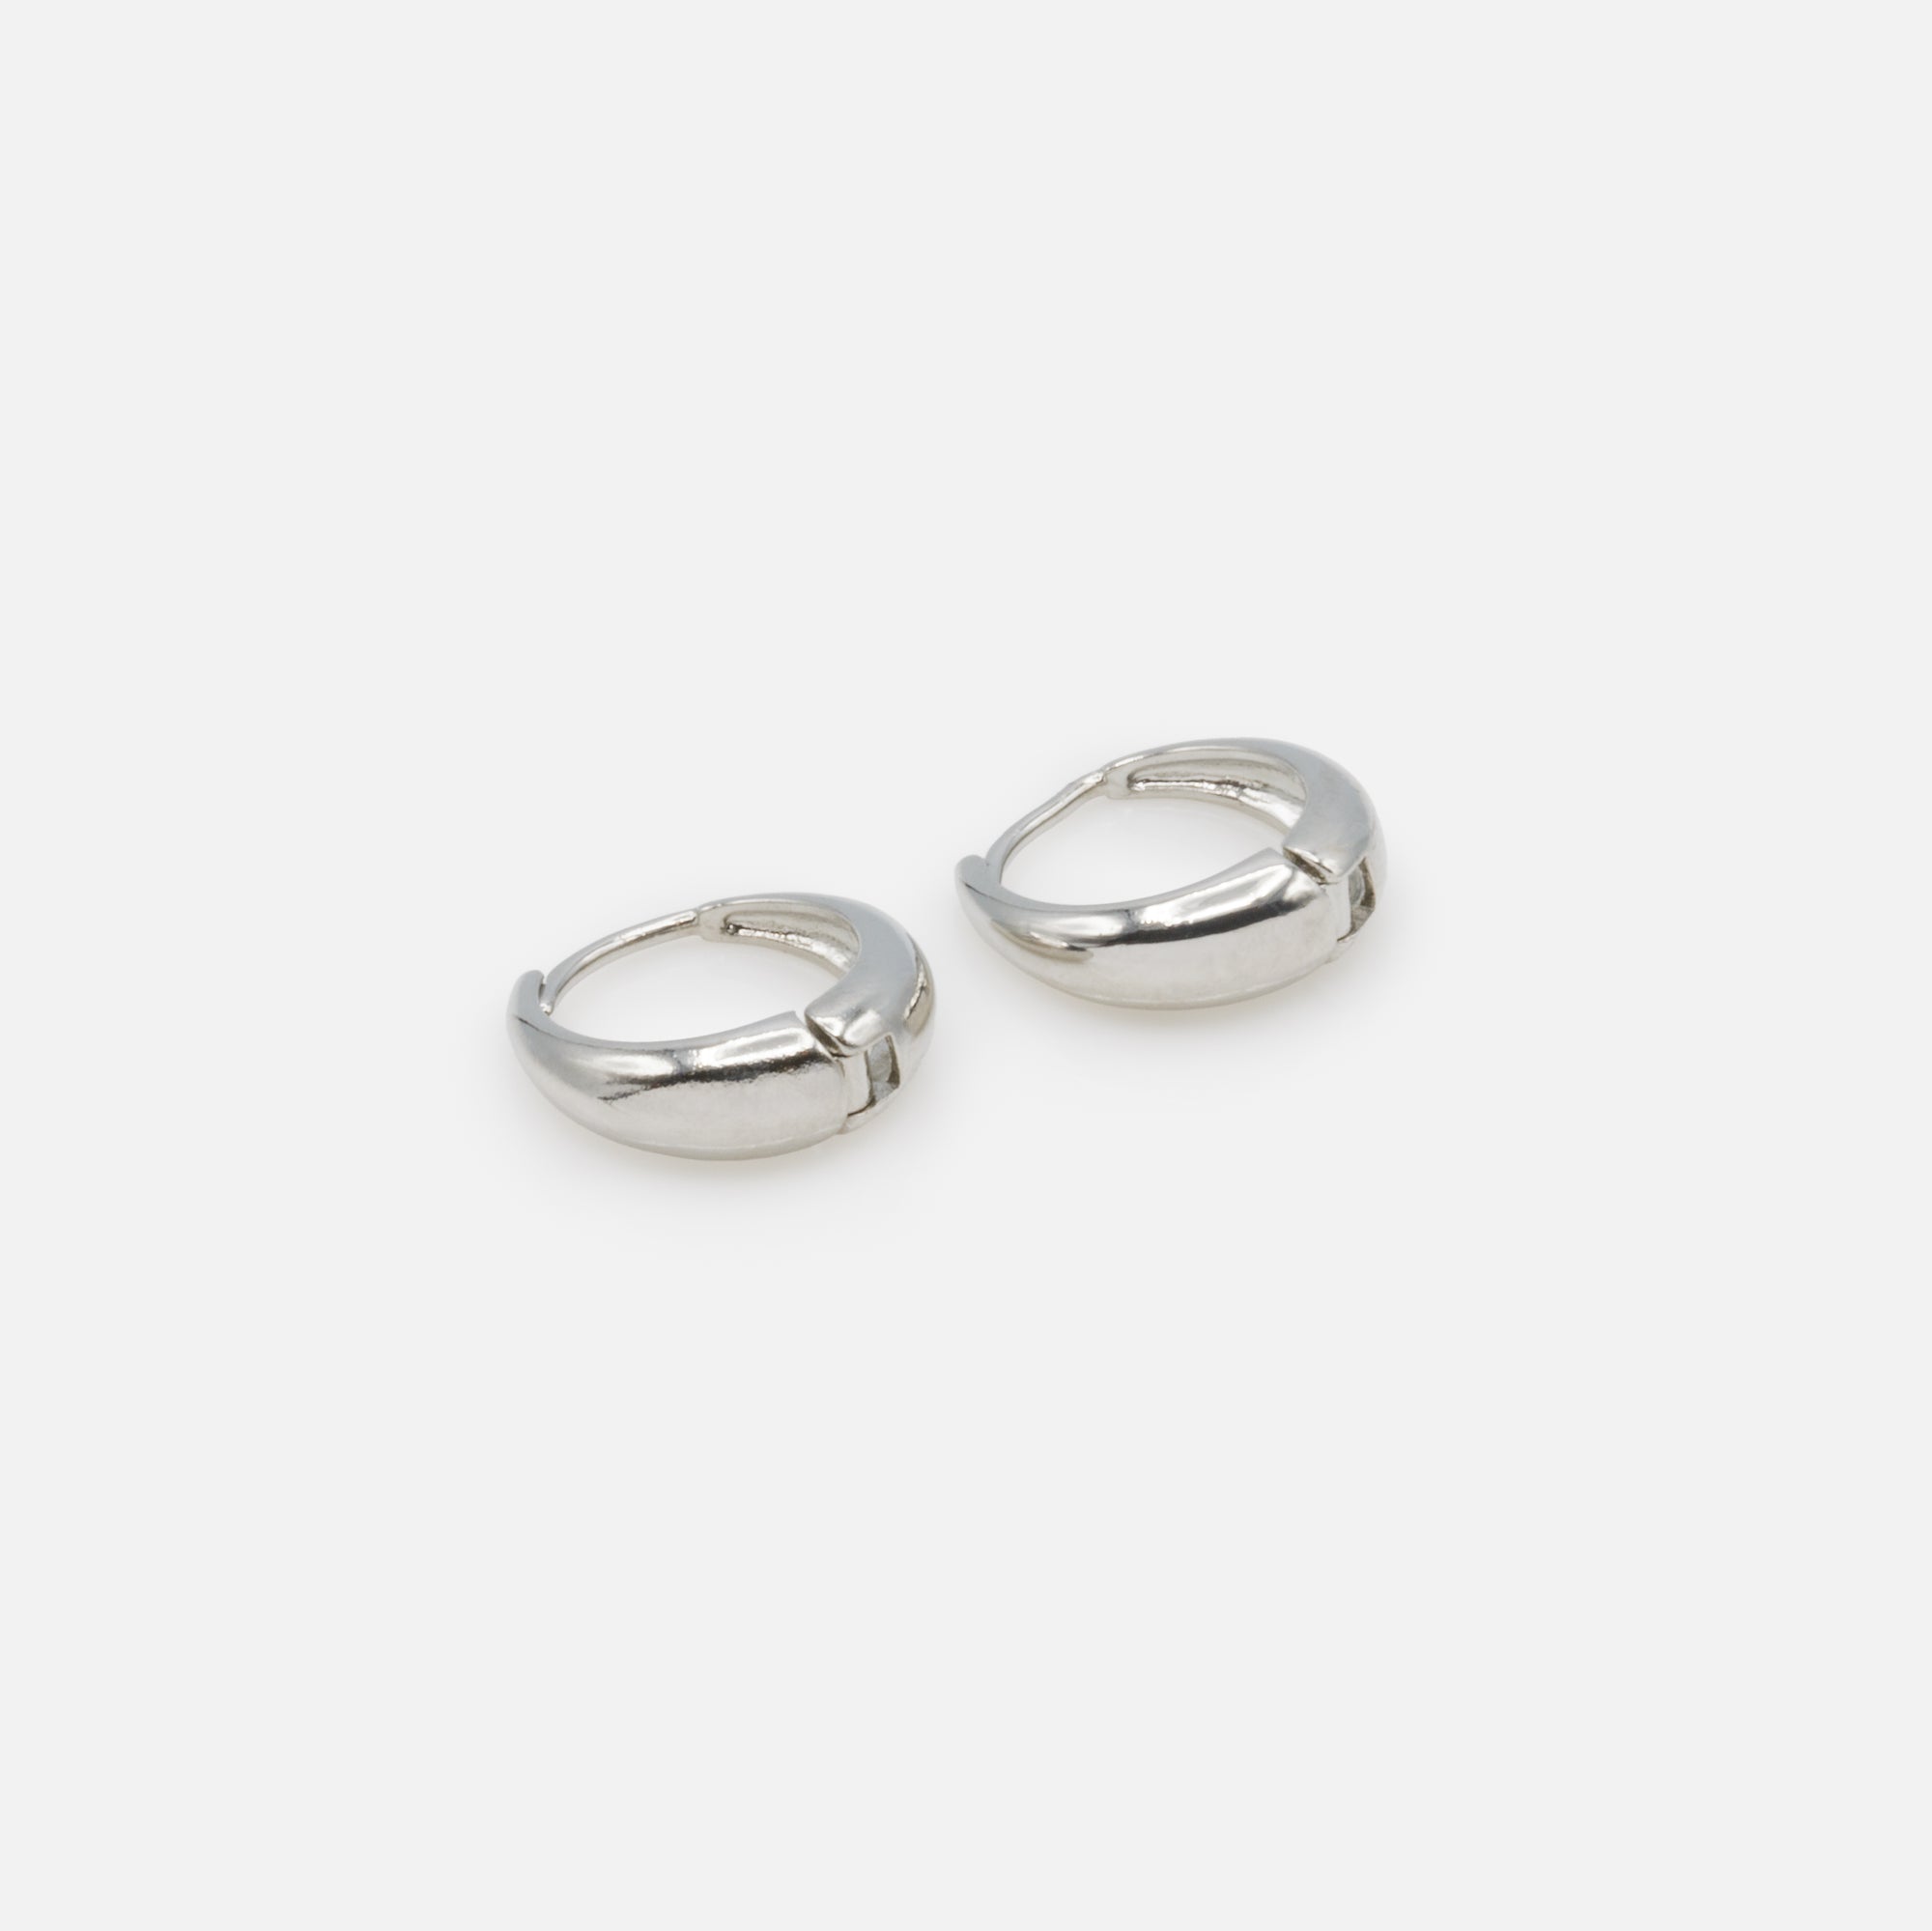 Wide base silver hoop earrings